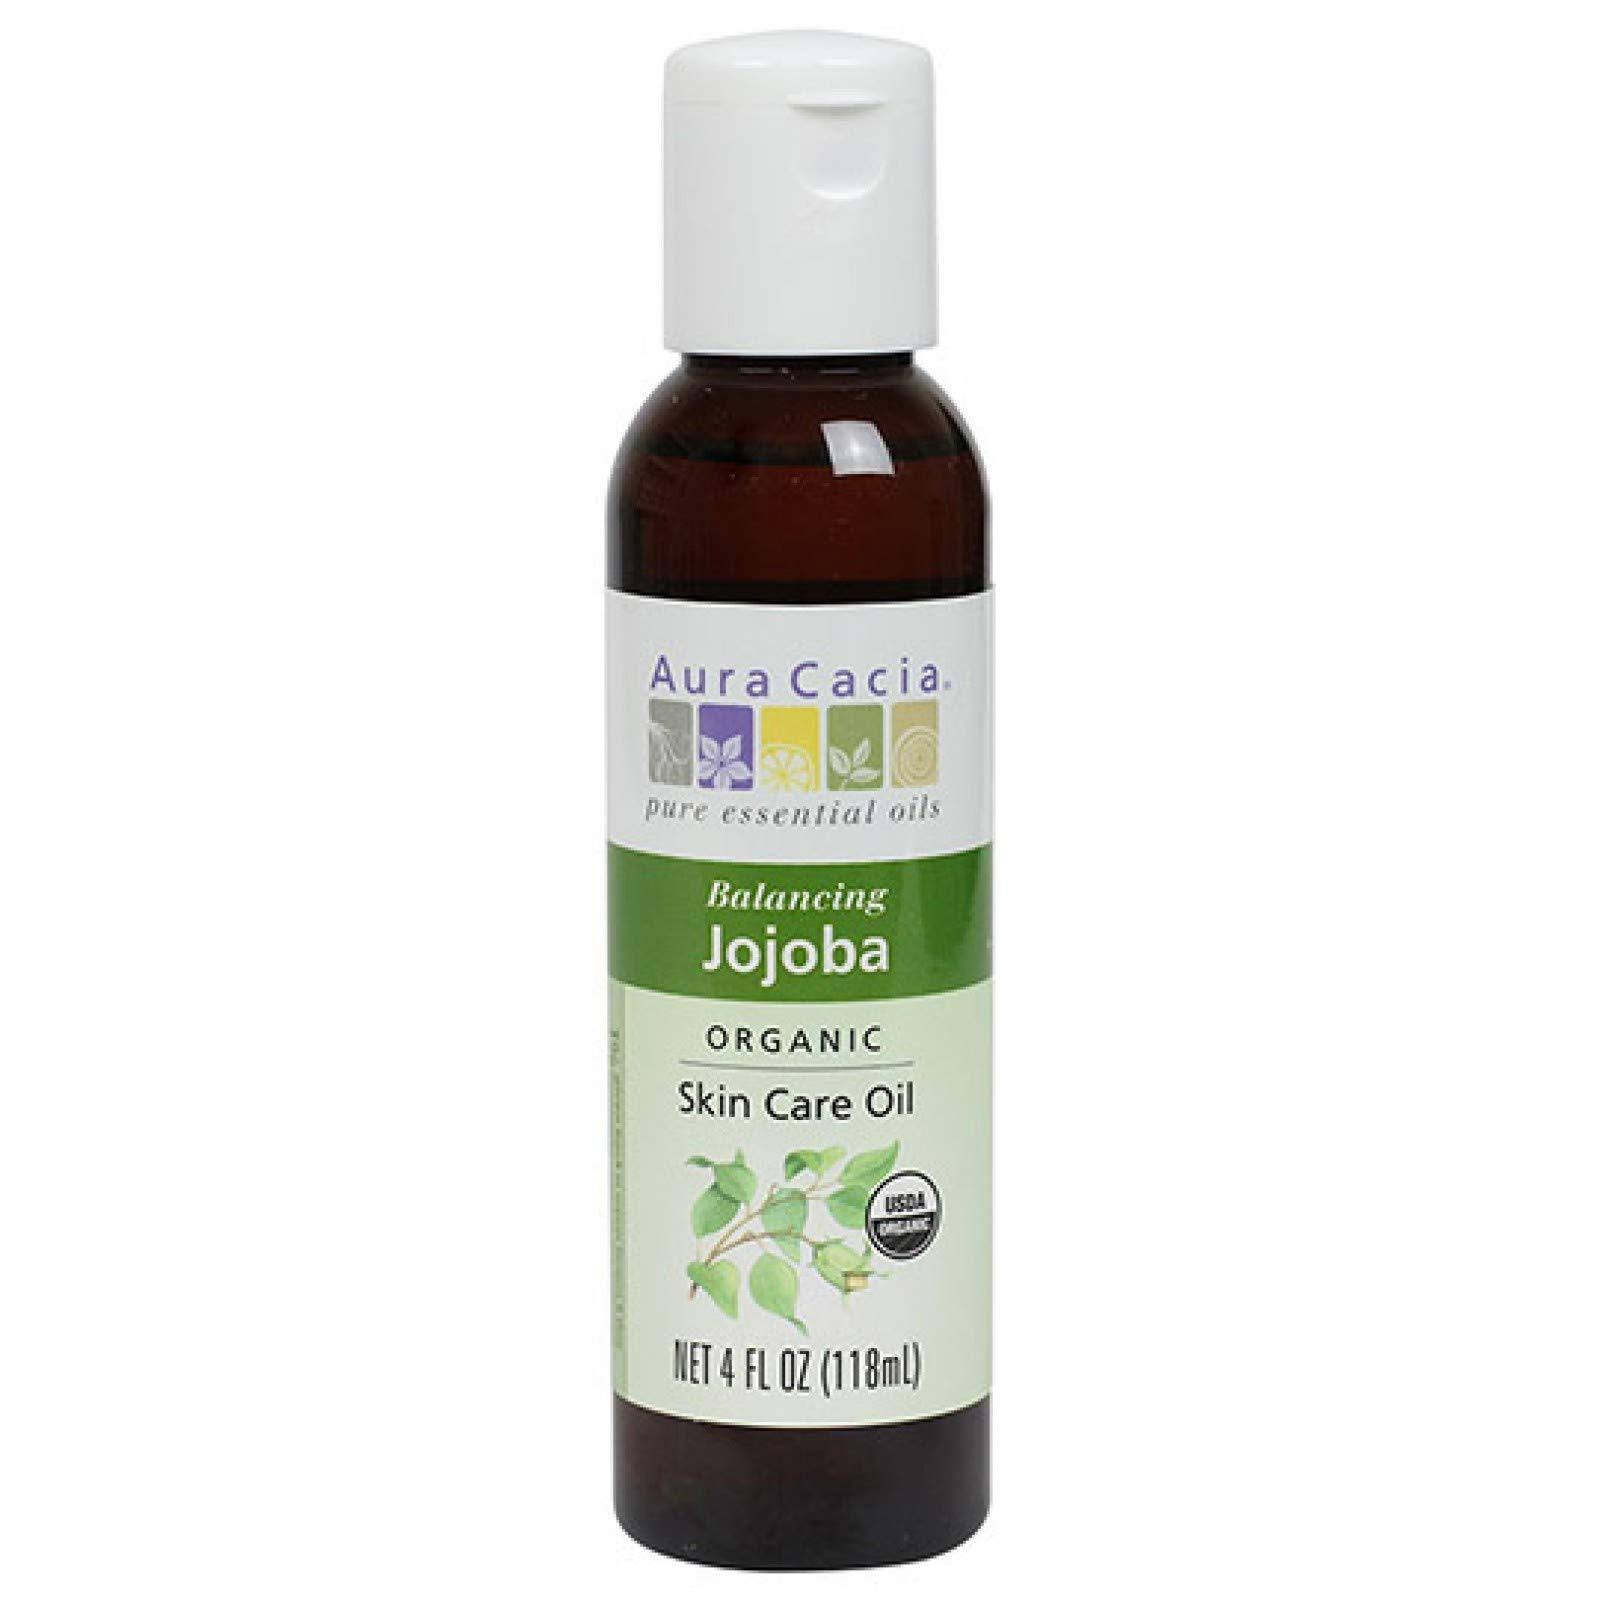 Aura Cacia Certified Organic Jojoba Skin Care Oil - 4oz